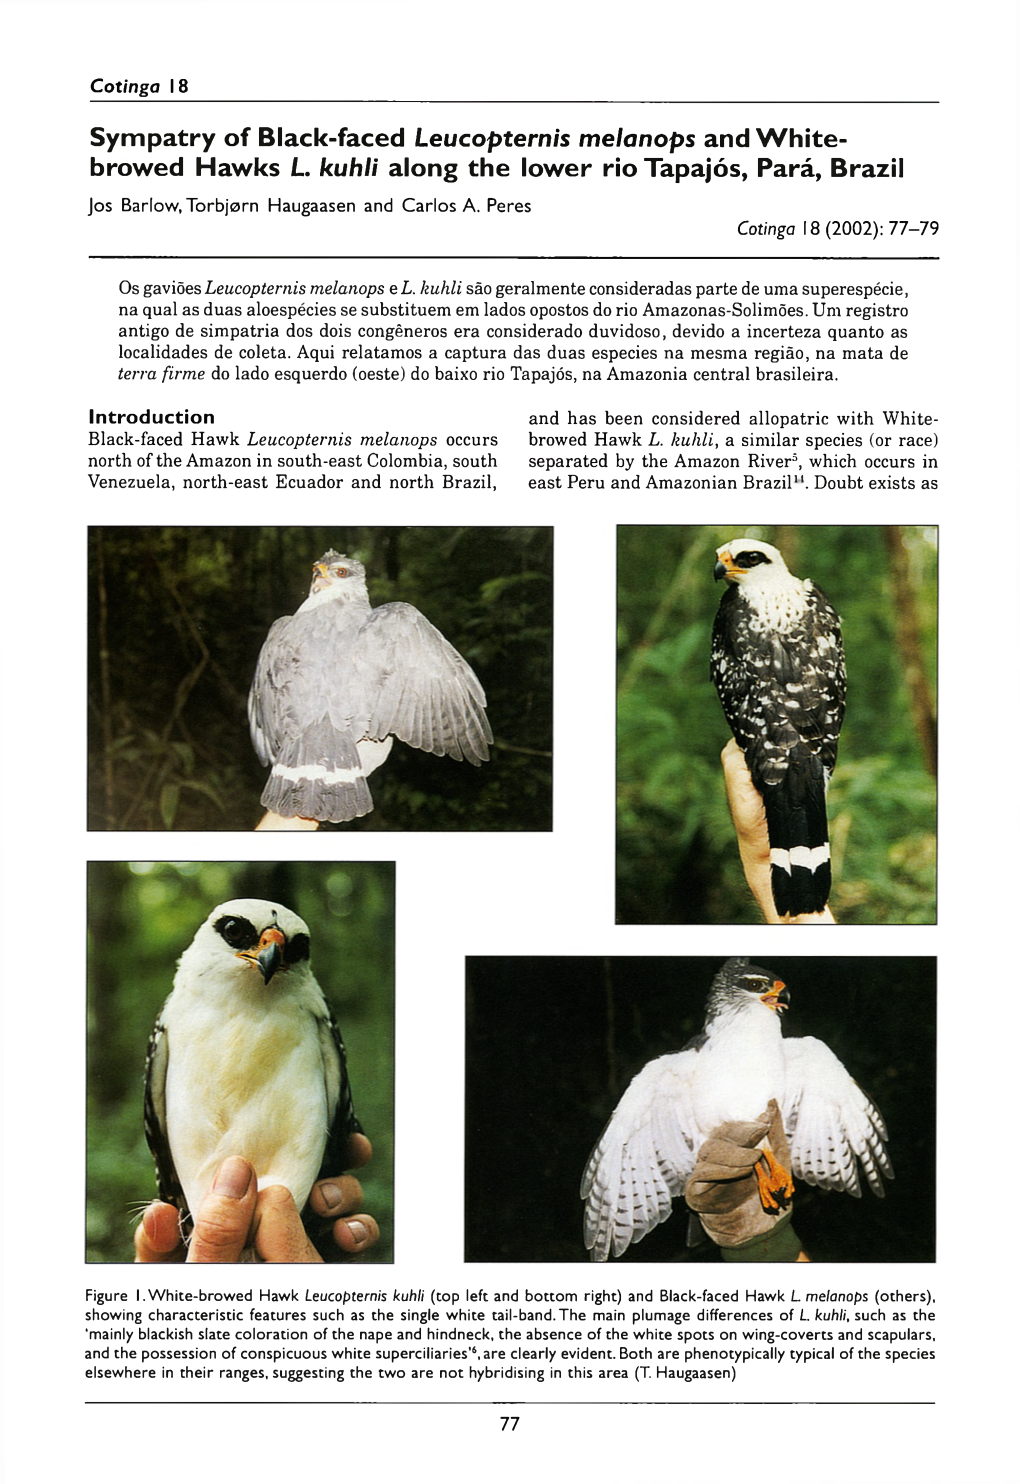 Sympatry of Black-Faced Leucopternis Melanops and White-Browed Hawks L. Kuhli Along the Lower Rio Tapajós, Pará, Brazil